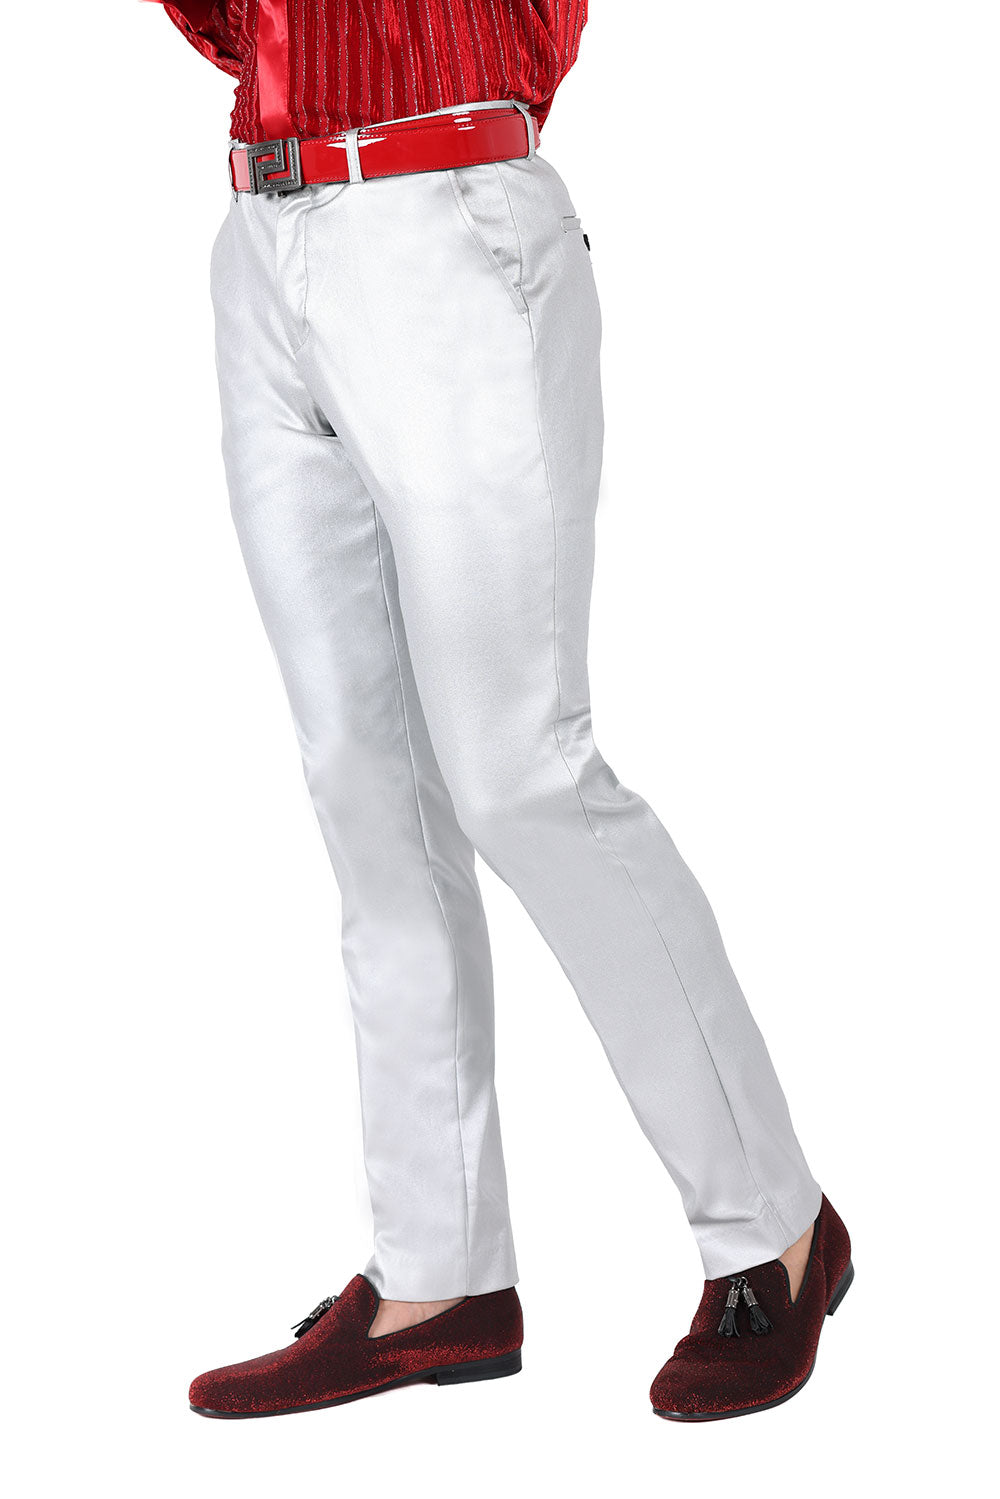 Barabas Men's Glossy Pattern Design Sparkly Luxury Dress Pants CP95 Light Silver